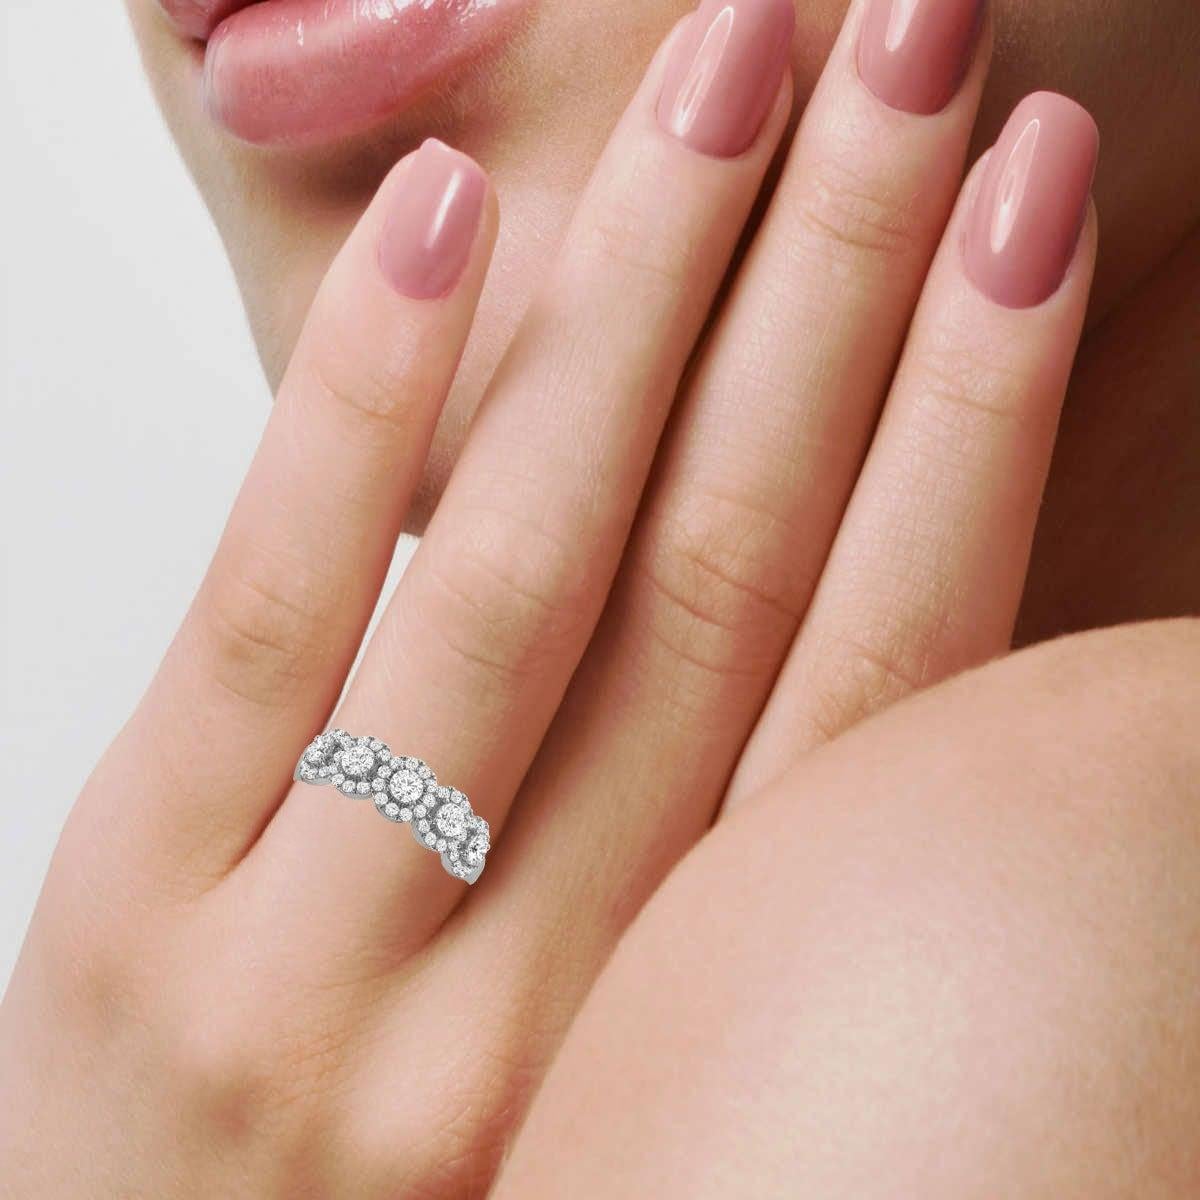 For Sale:  18k White Gold Petite Jenna Halo Diamond Ring '1/2 Ct. Tw' 3